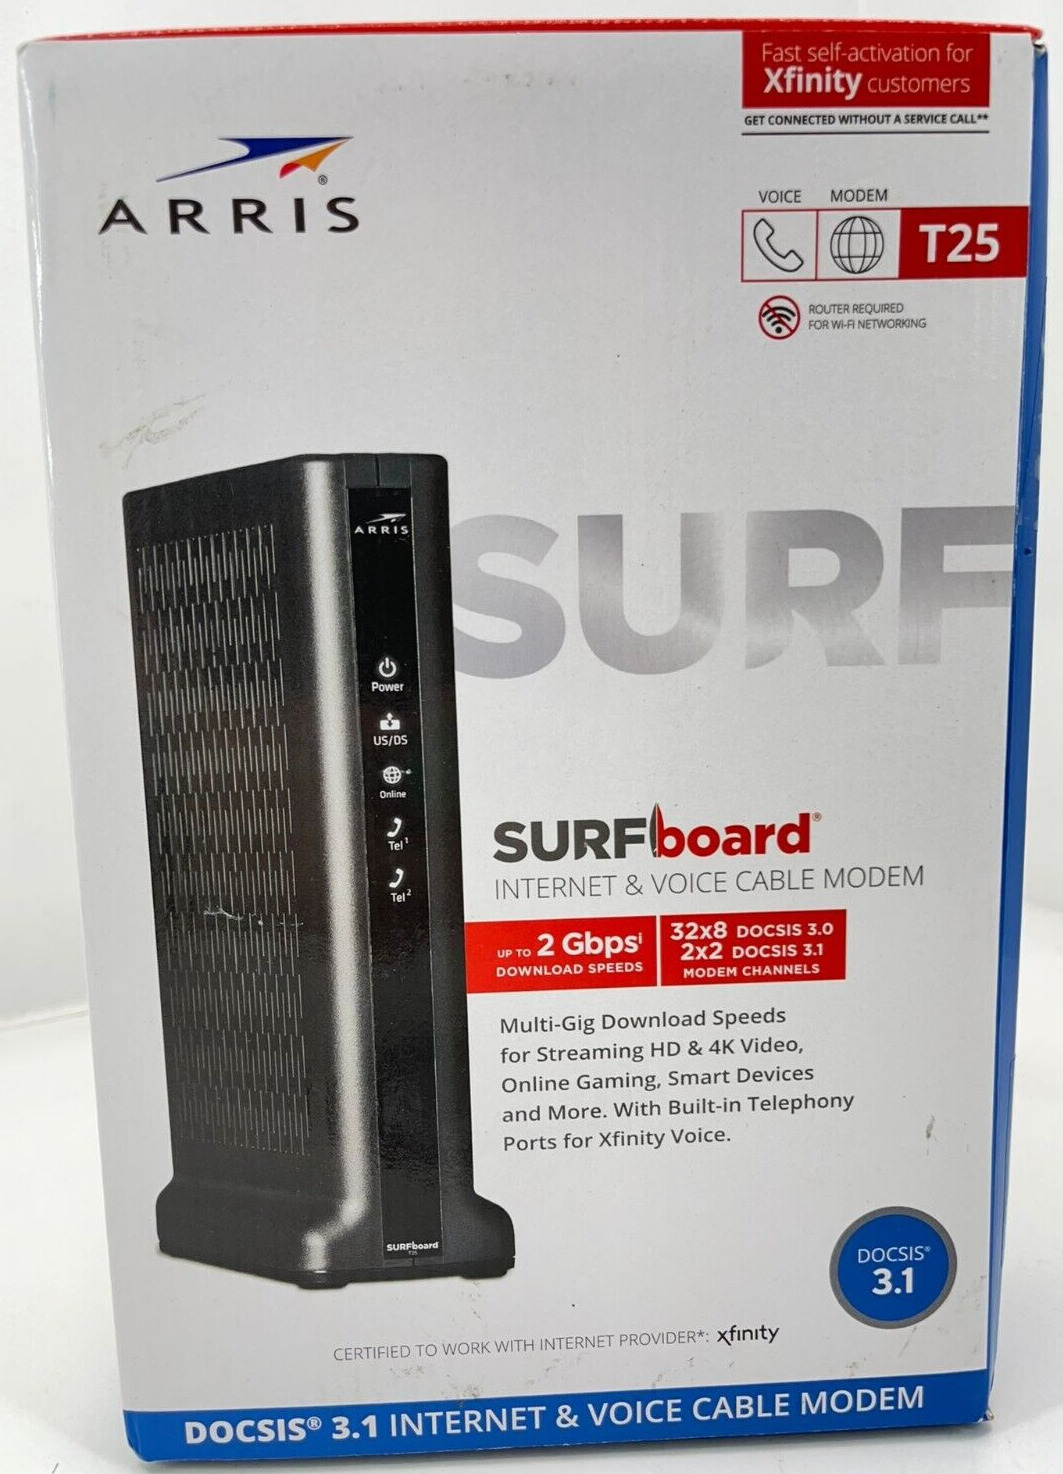 ARRIS SURFboard DOCSIS 3.1 Internet & Voice Modem for Xfinity, Model T25